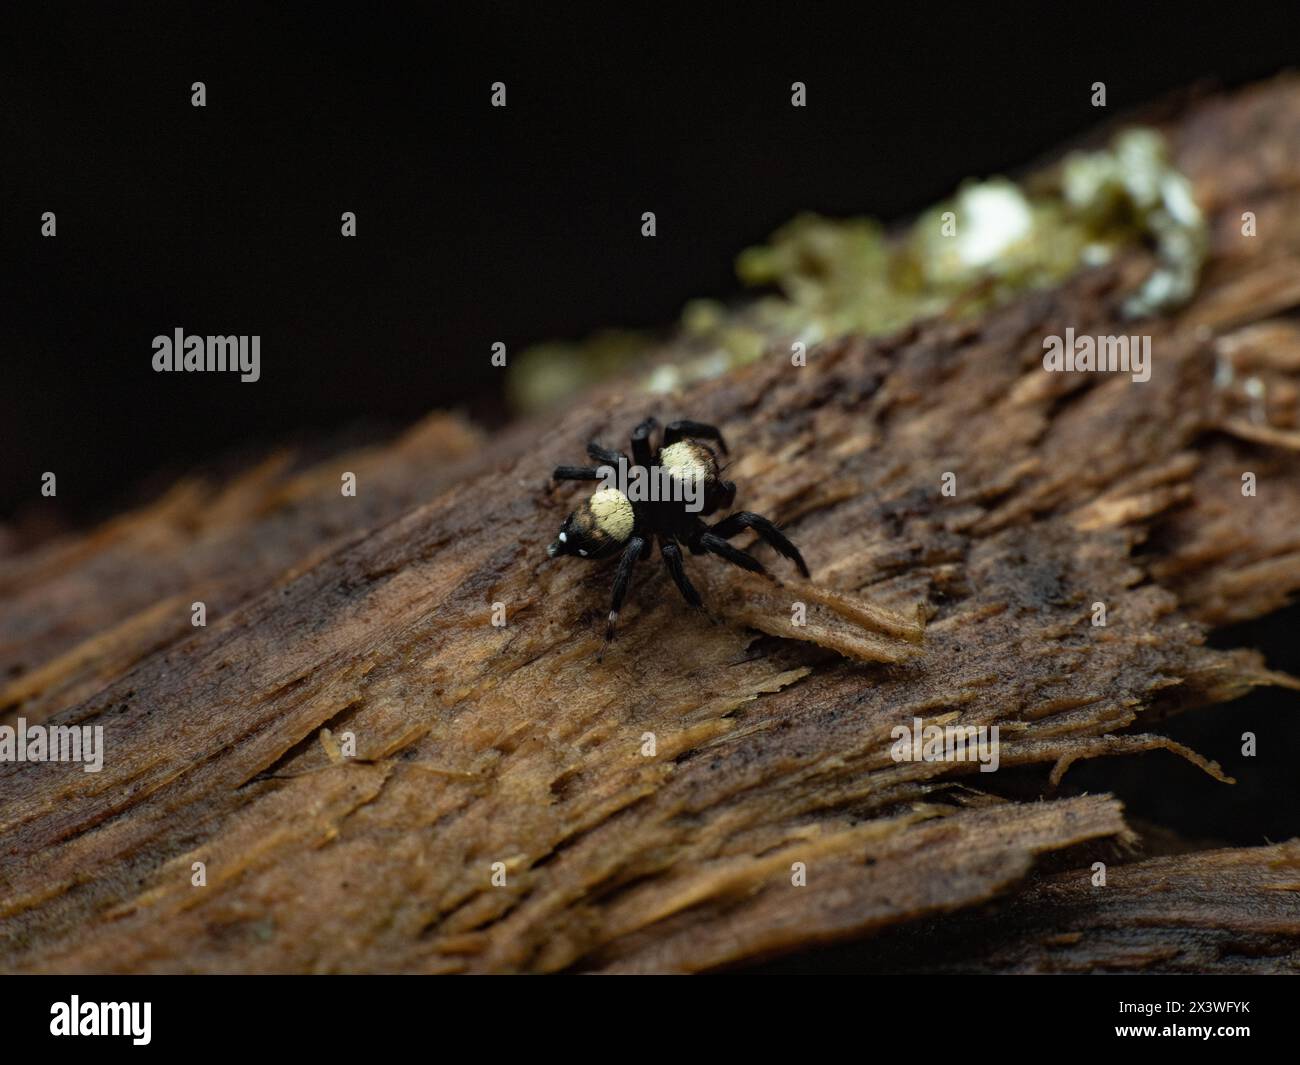 top view of thorelliola ensifera, sword-bearing jumping spider on wet wood Stock Photo